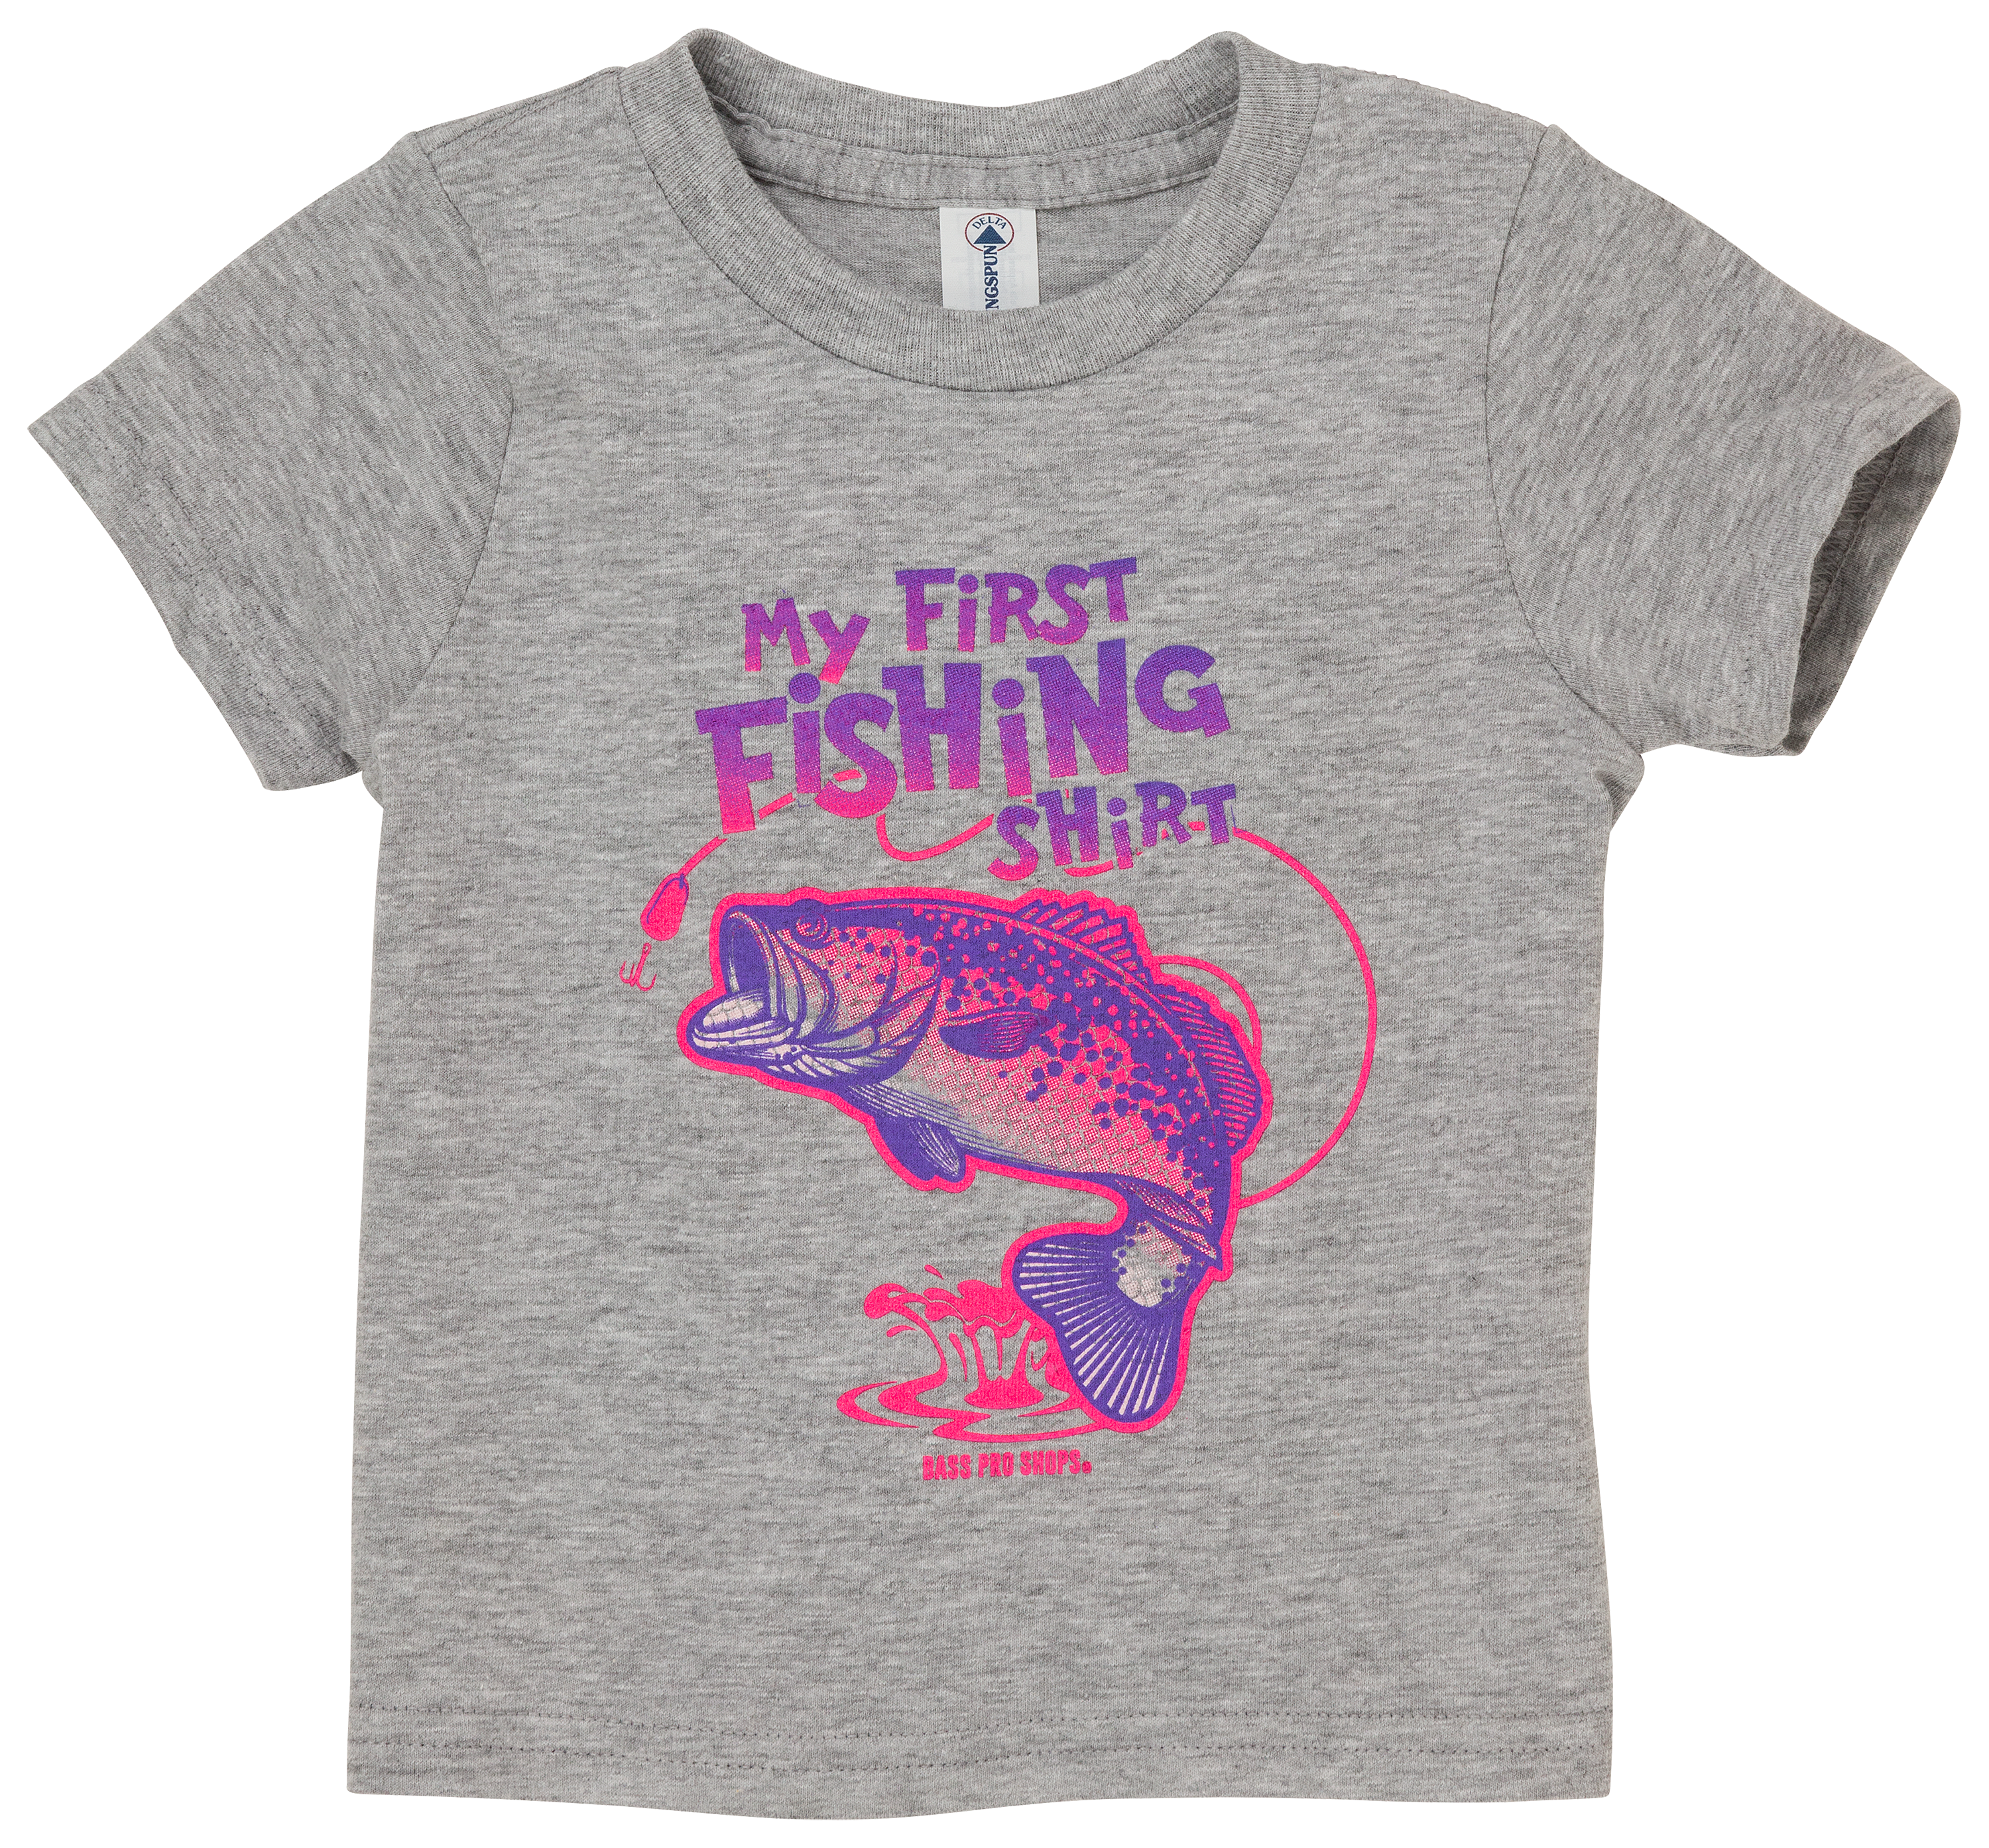 Bass Pro Shops My First Fishing Shirt Short-Sleeve T-Shirt for